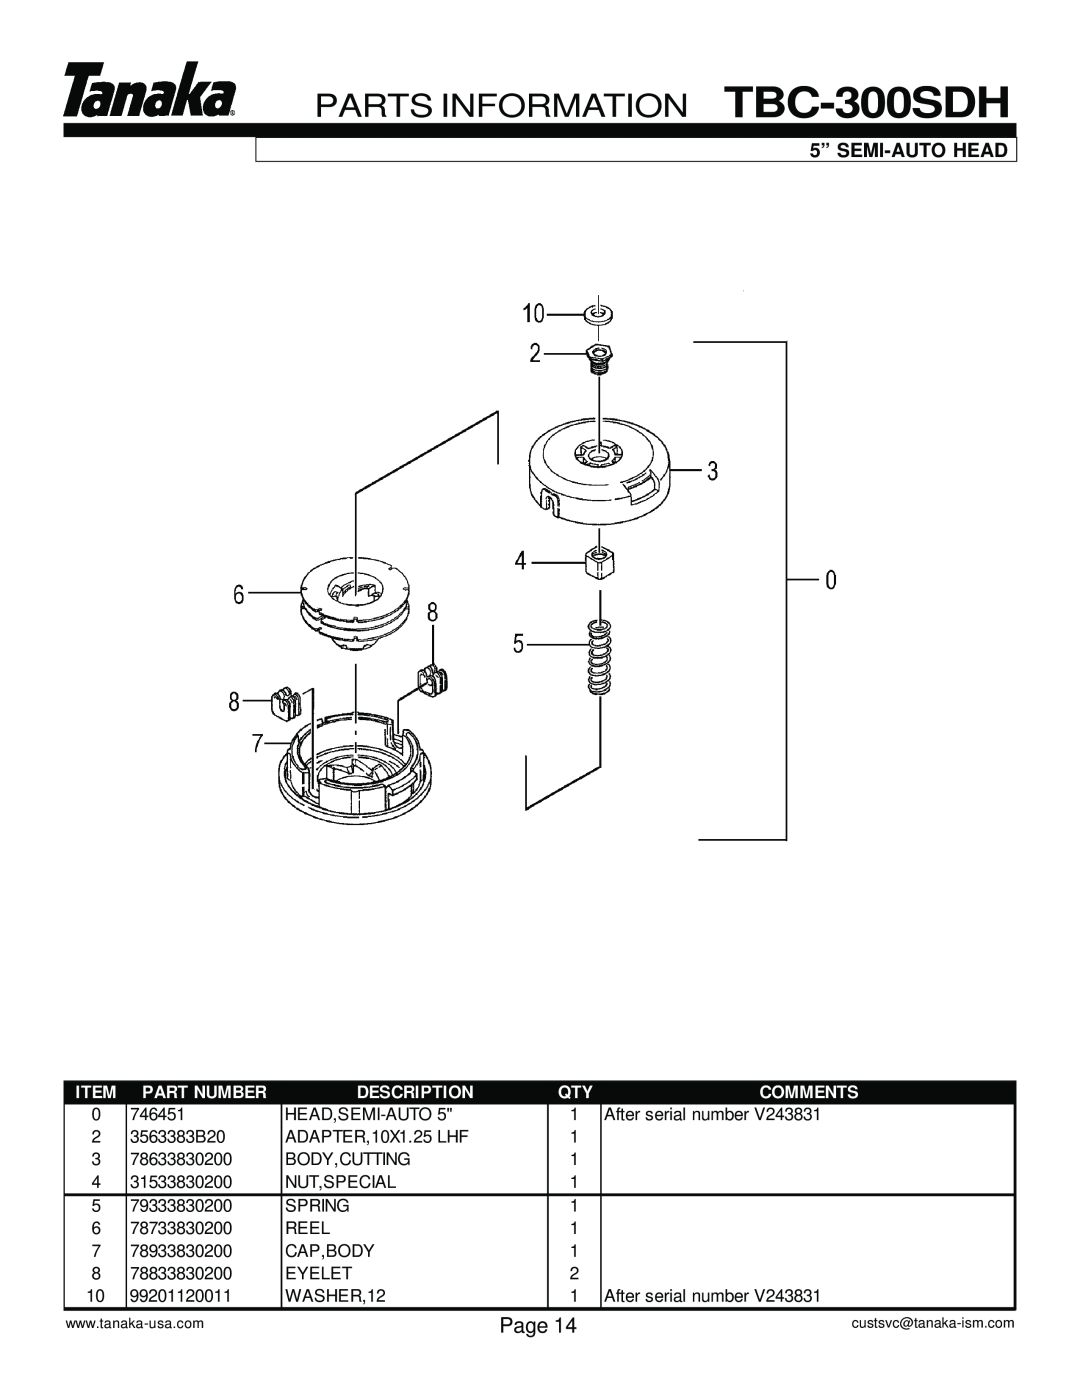 Tanaka manual PARTS INFORMATION TBC-300SDH, Page, 5” SEMI-AUTO HEAD, Part Number, Description, Comments 